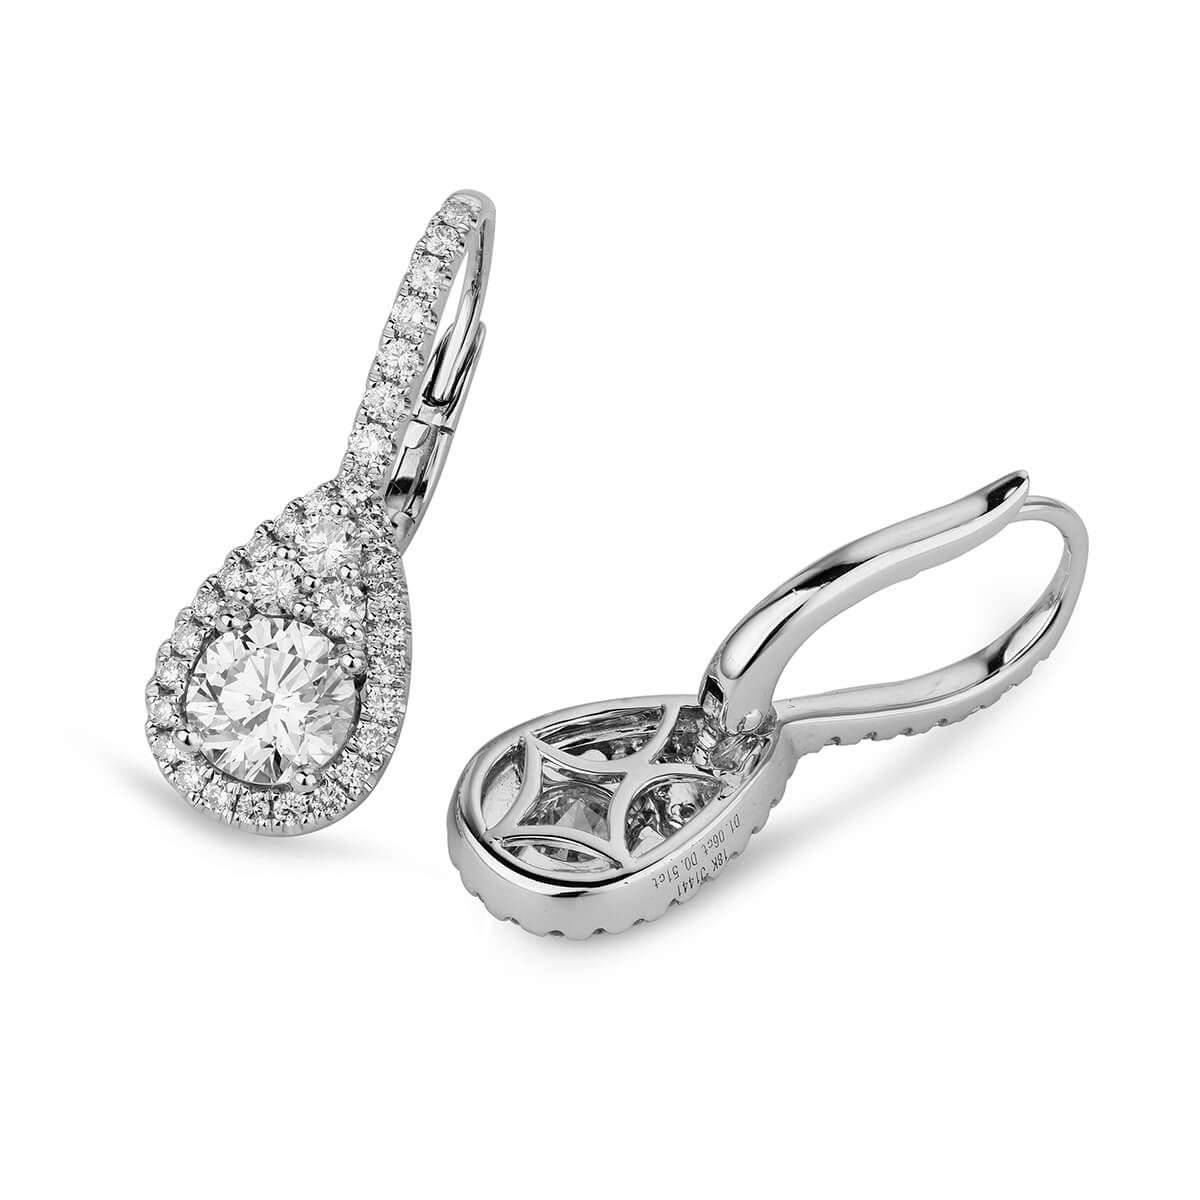 White Diamond Earrings, 1.05 Ct. (1.59 Ct. TW), Round shape